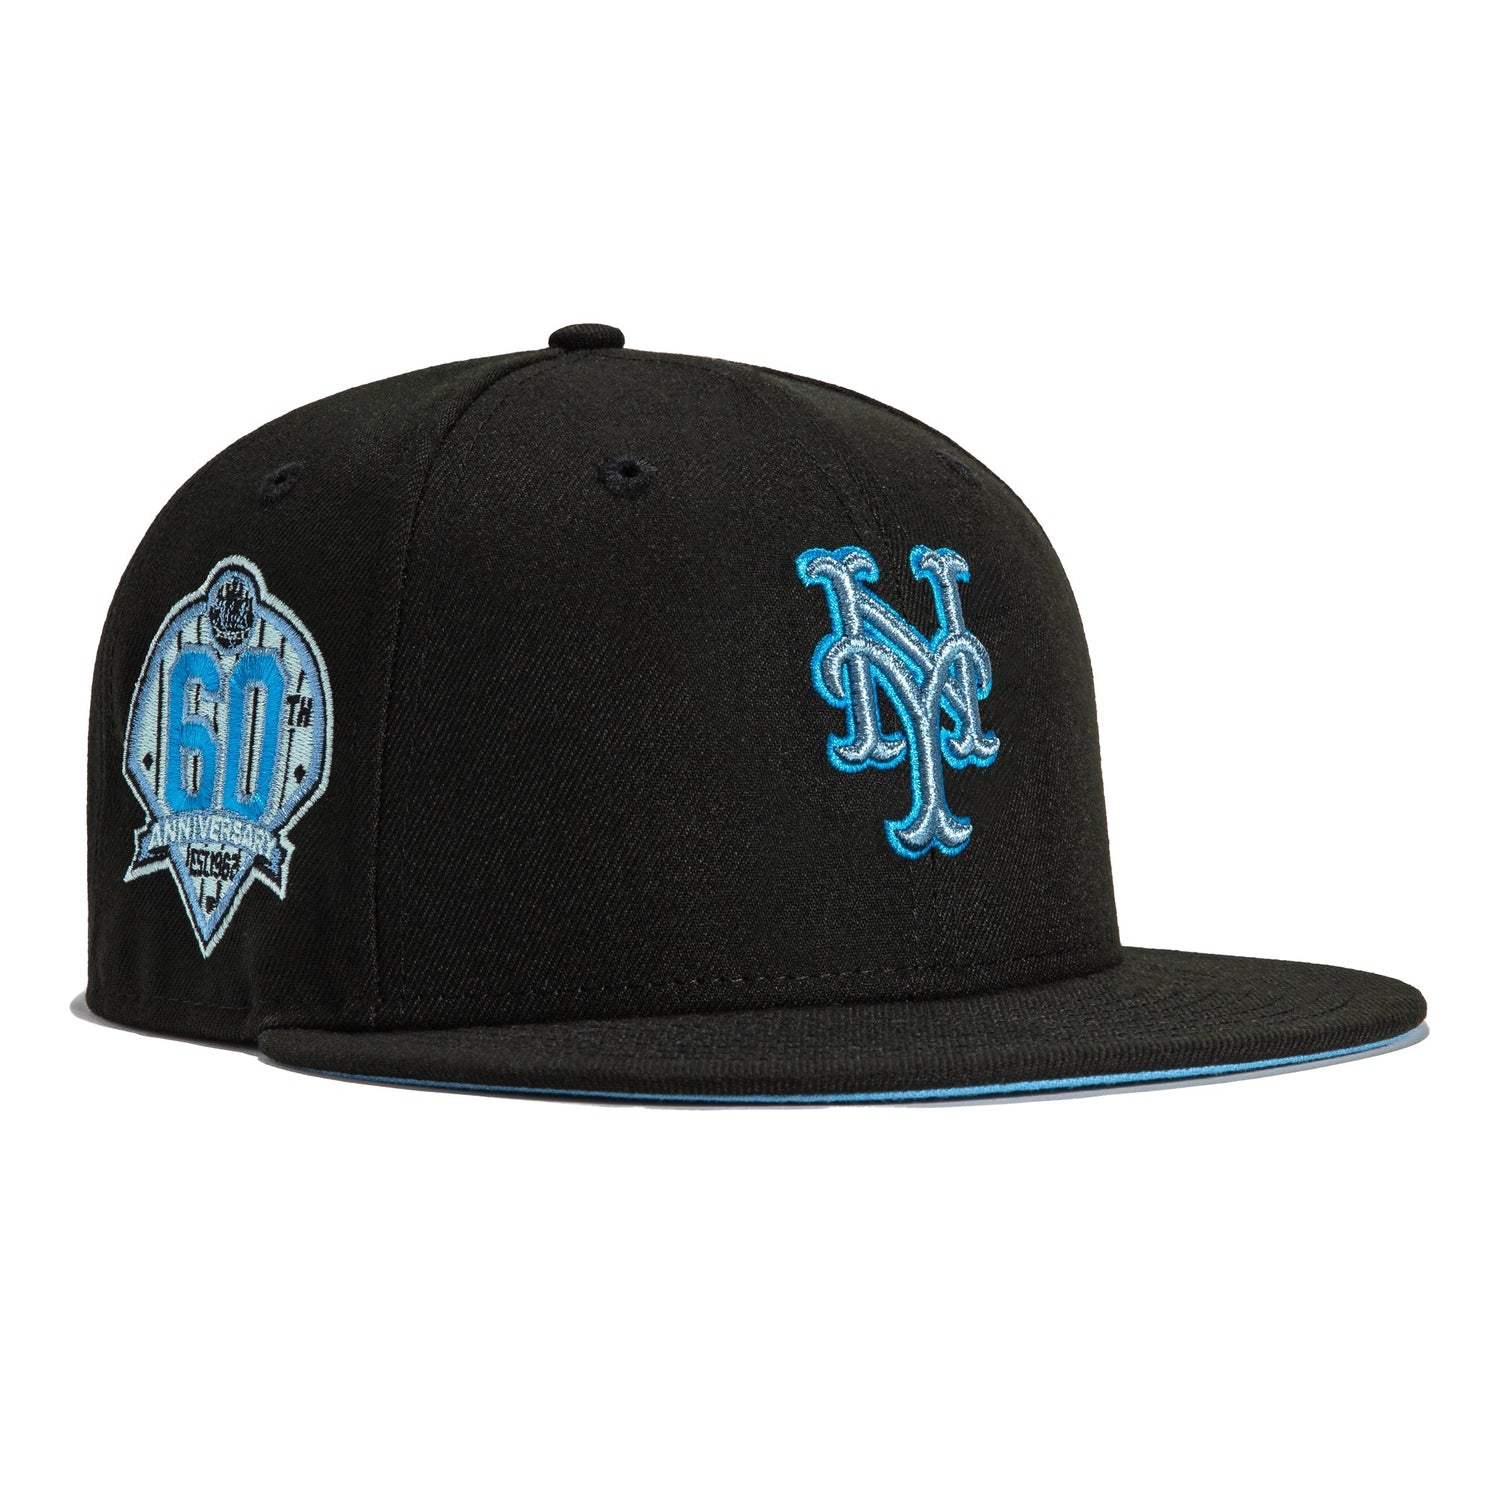 New Era 59FIFTY Black Ice New York Mets 60th Anniversary Patch Hat - Black Black / 7 3/8